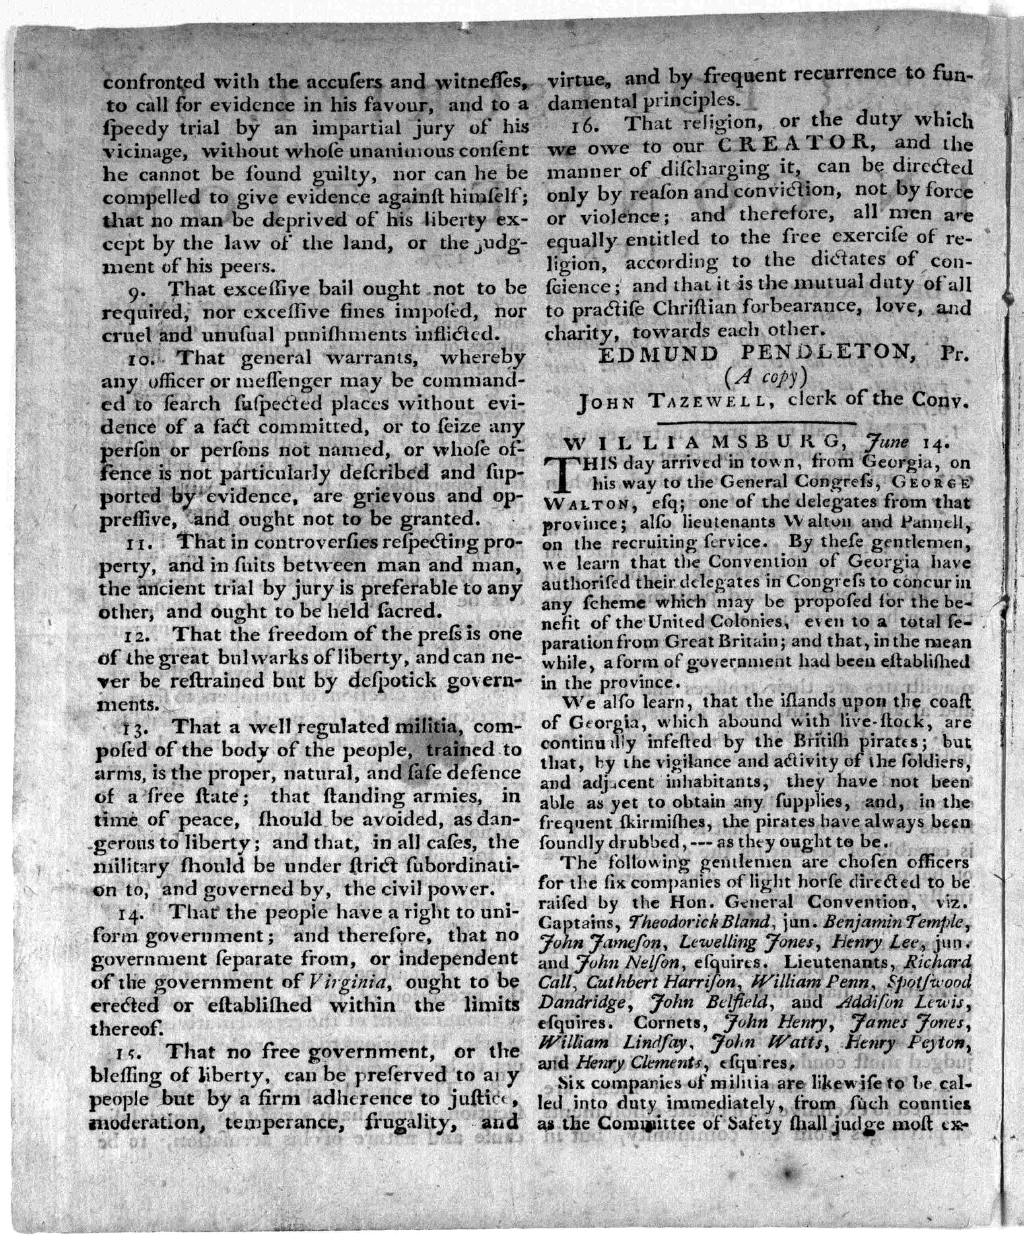 Virginia Declaration of Rights p2